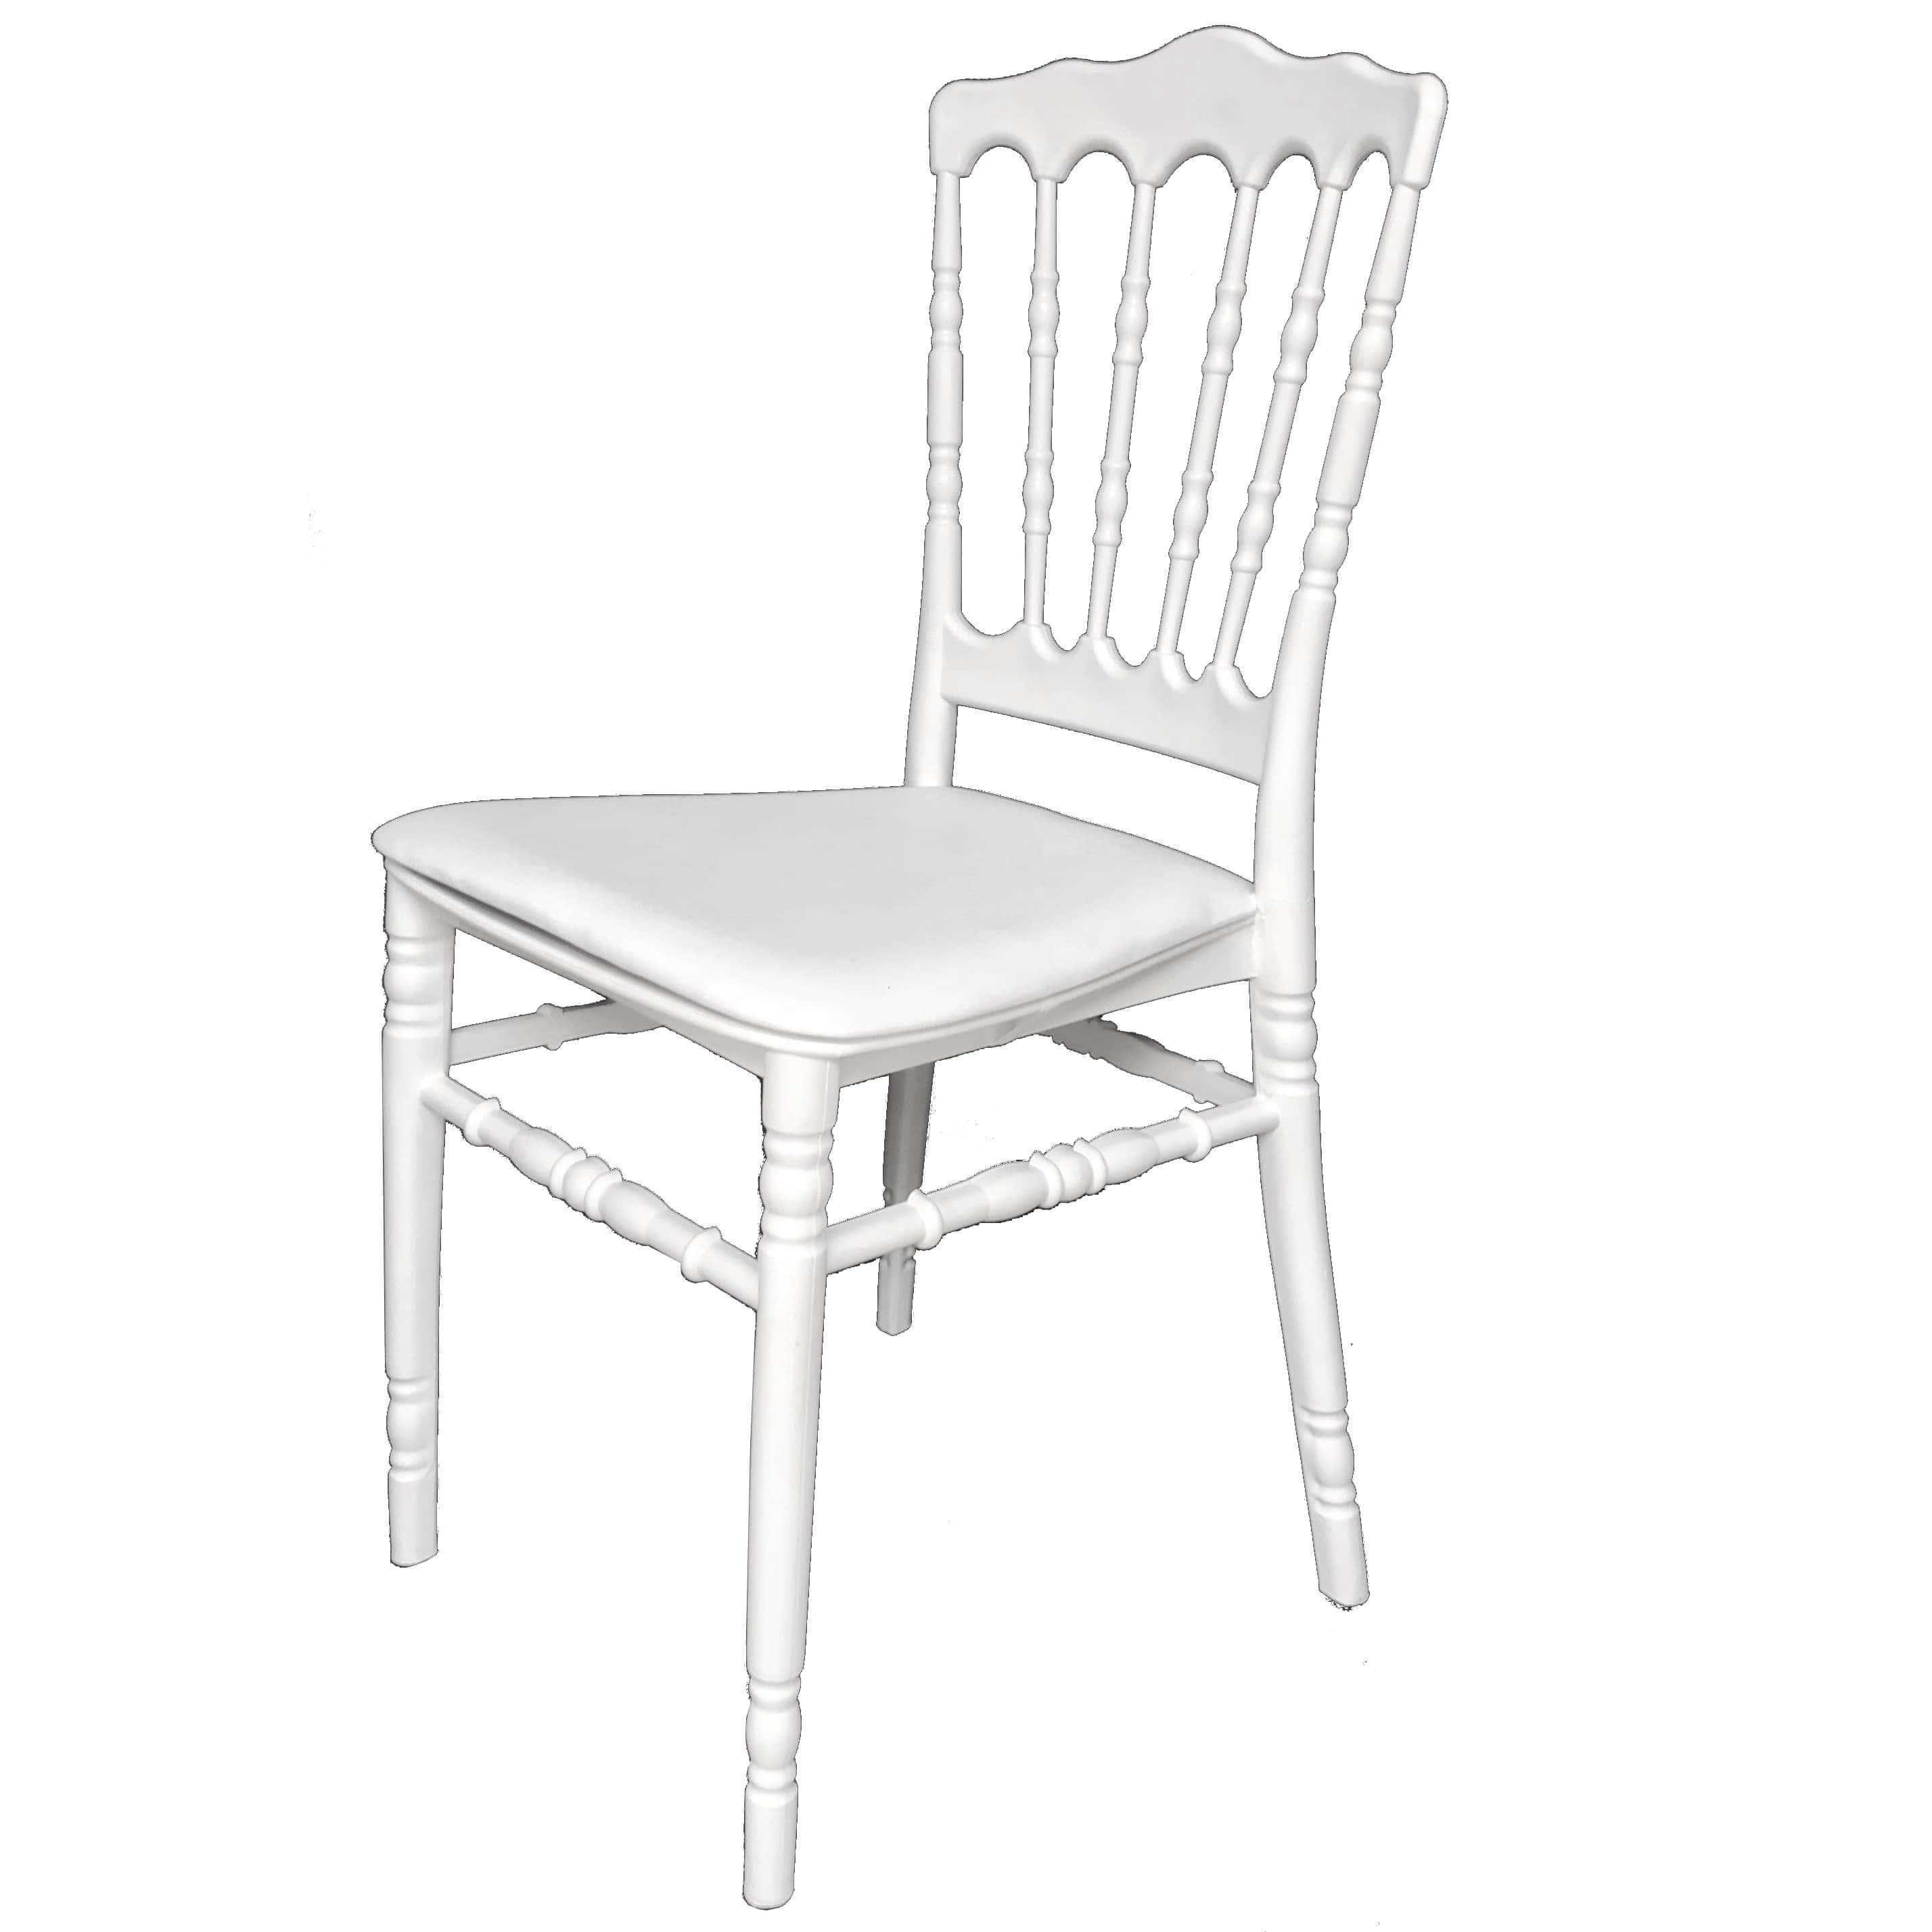 White NAPOLEON chair with cushion